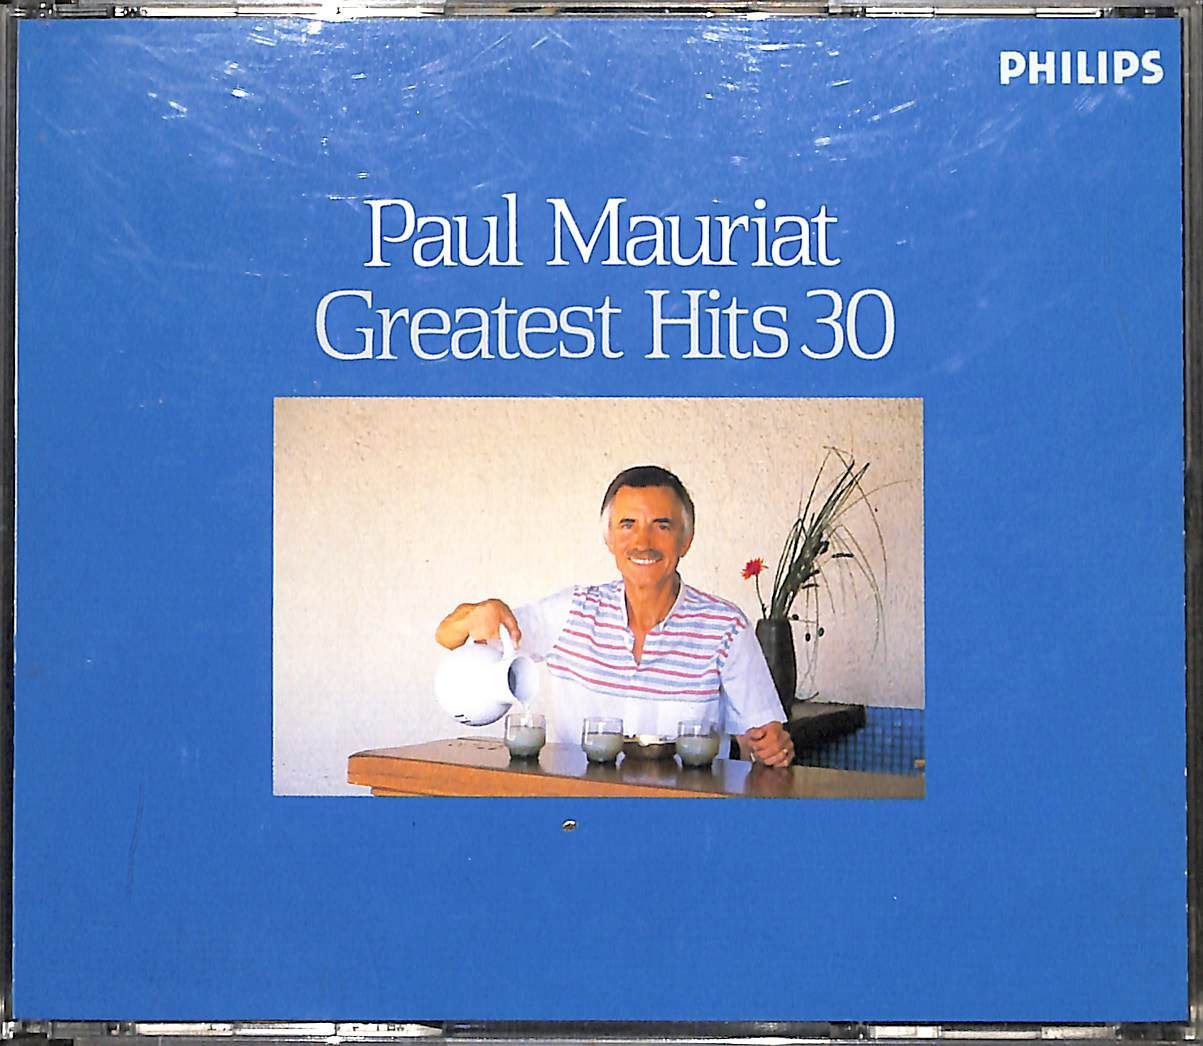 CD ポール・モーリア・ベスト30 2枚組 PAUL MAURIAT Greatest Hits 30 - CD